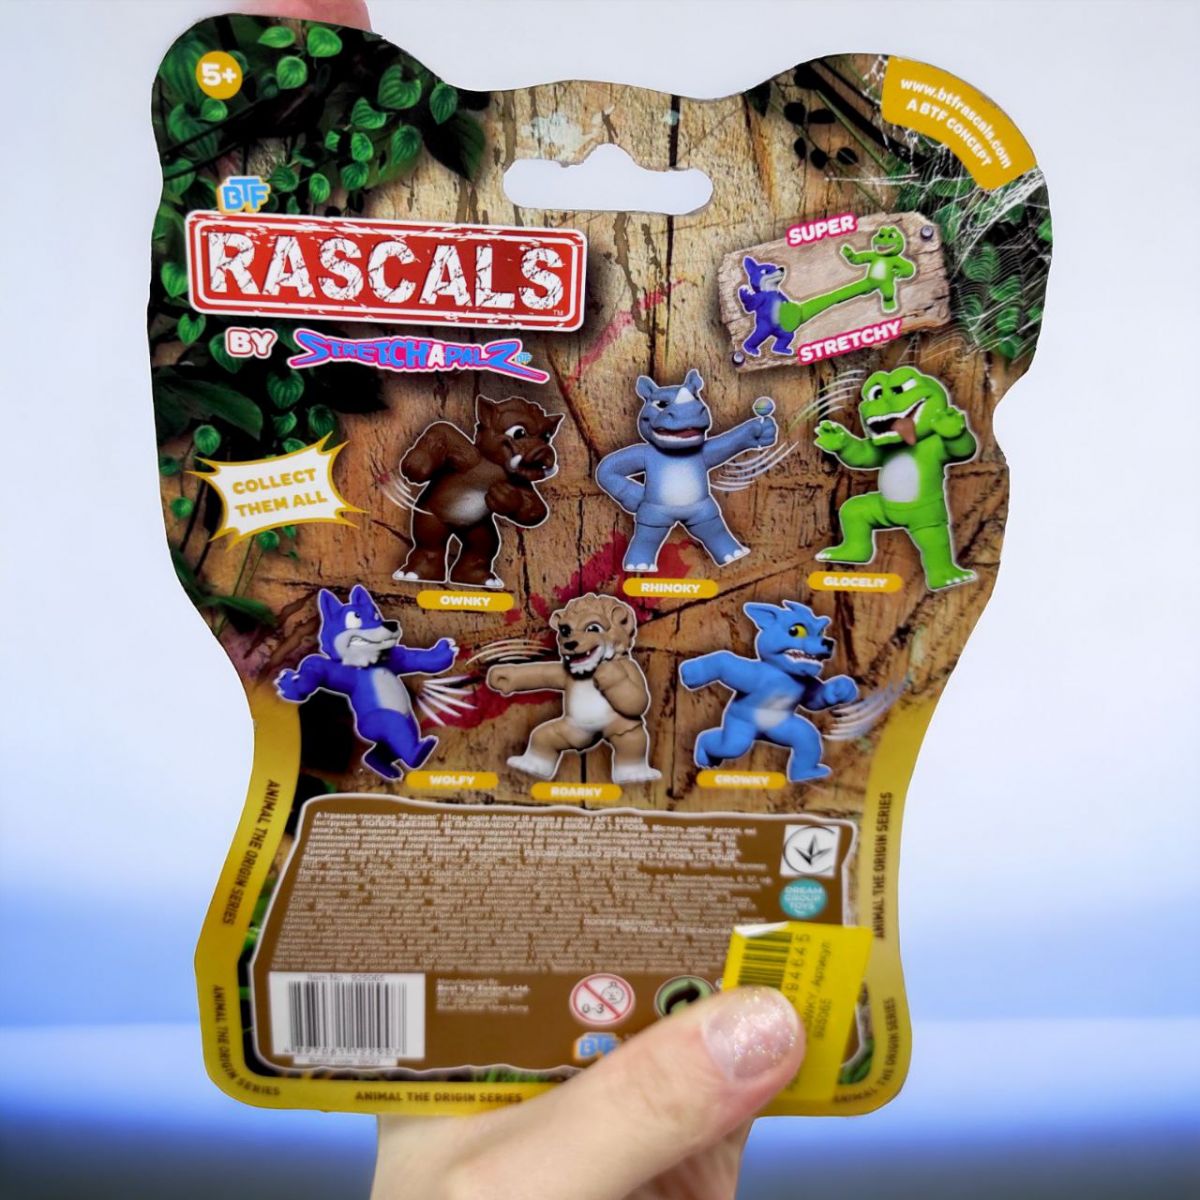 Іграшка-тягучка "Stretchapalz Rascals: Rhinoky"